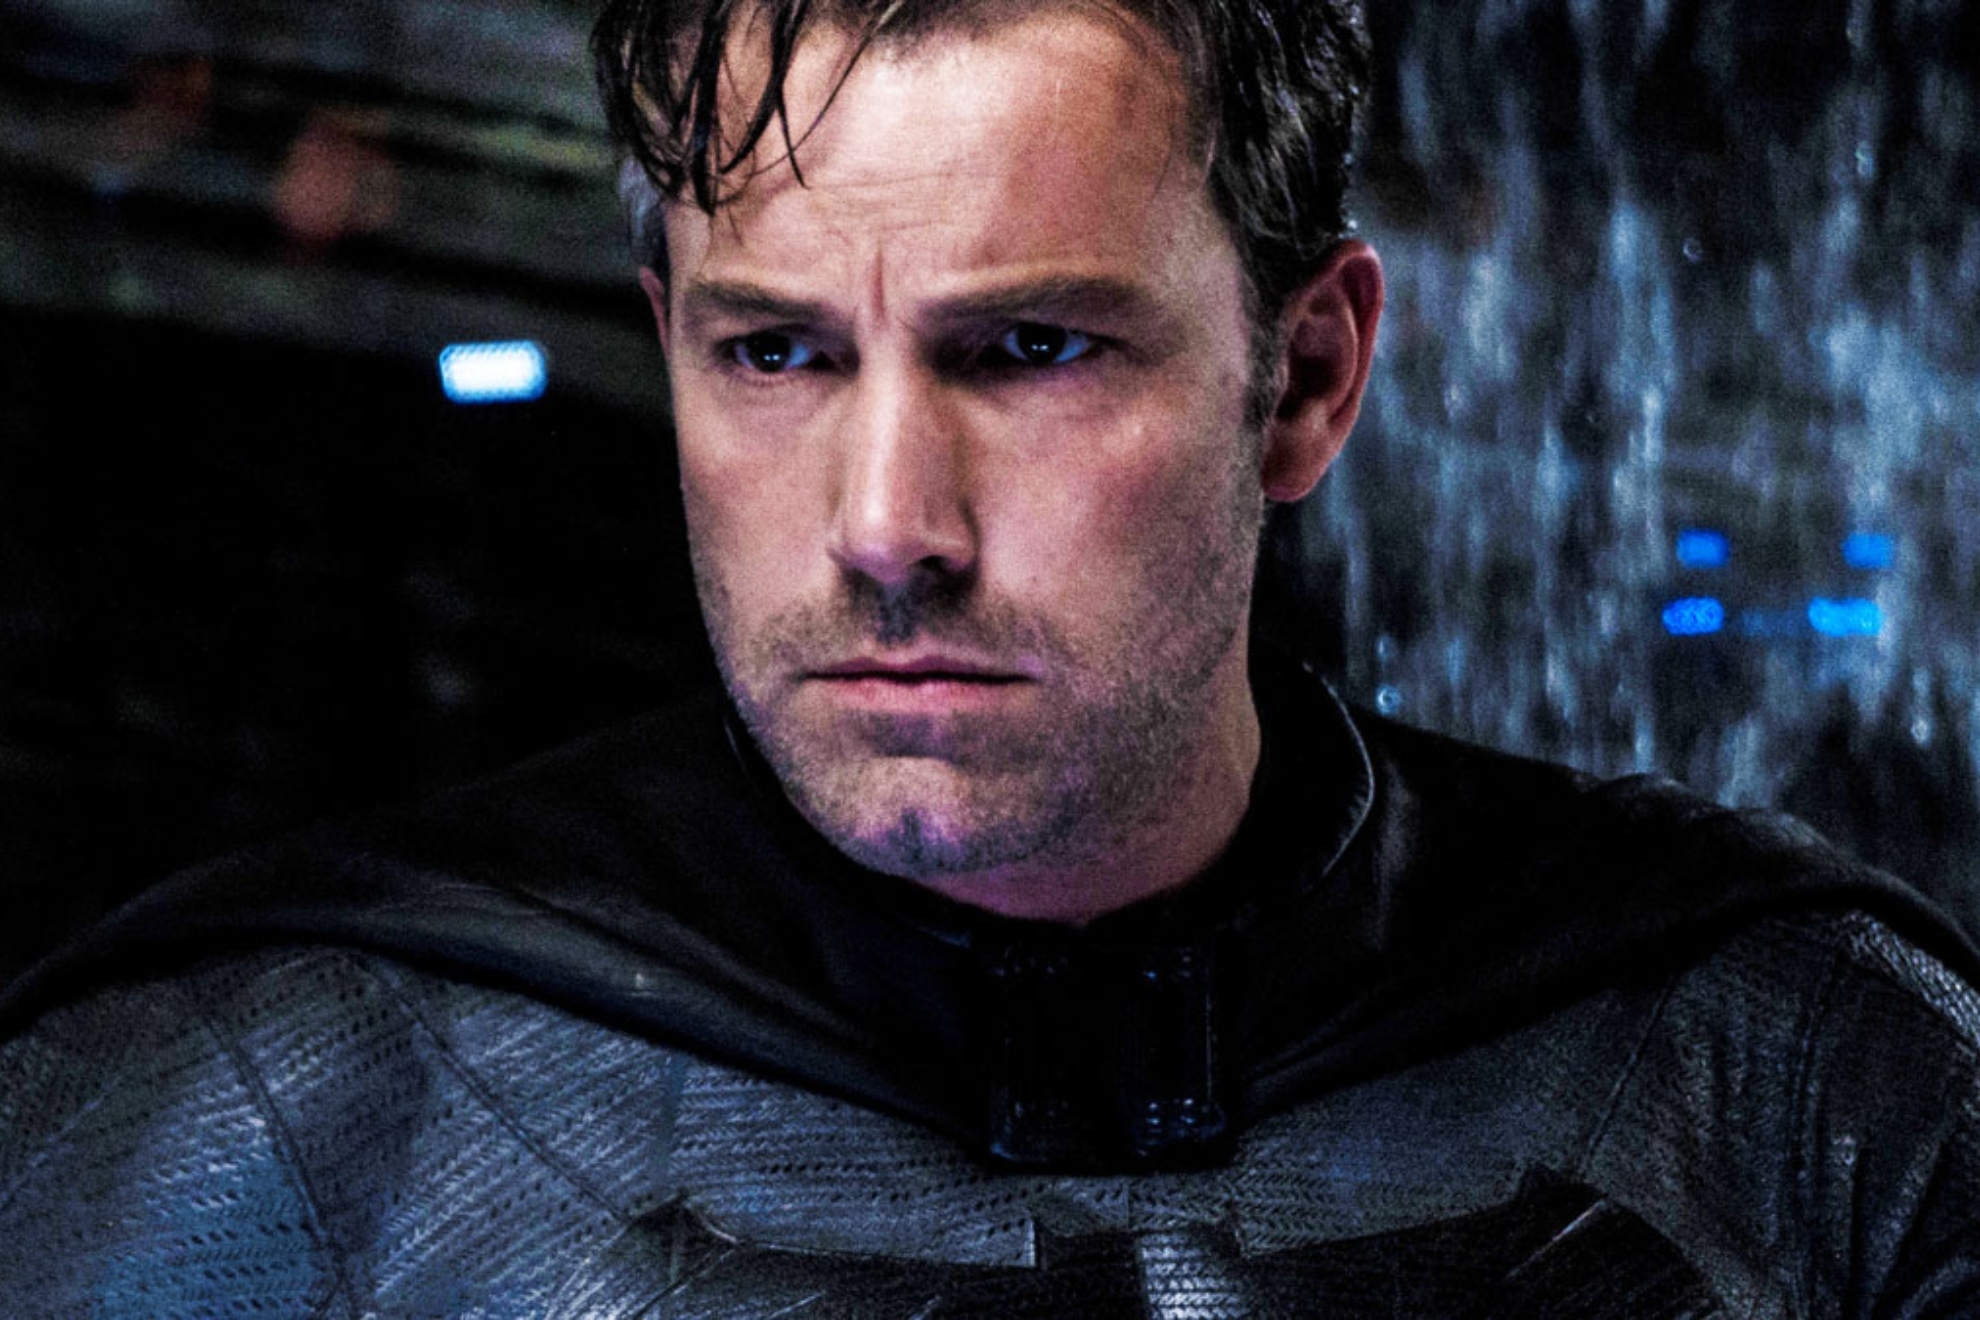 Is Ben Affleck out as Batman again?